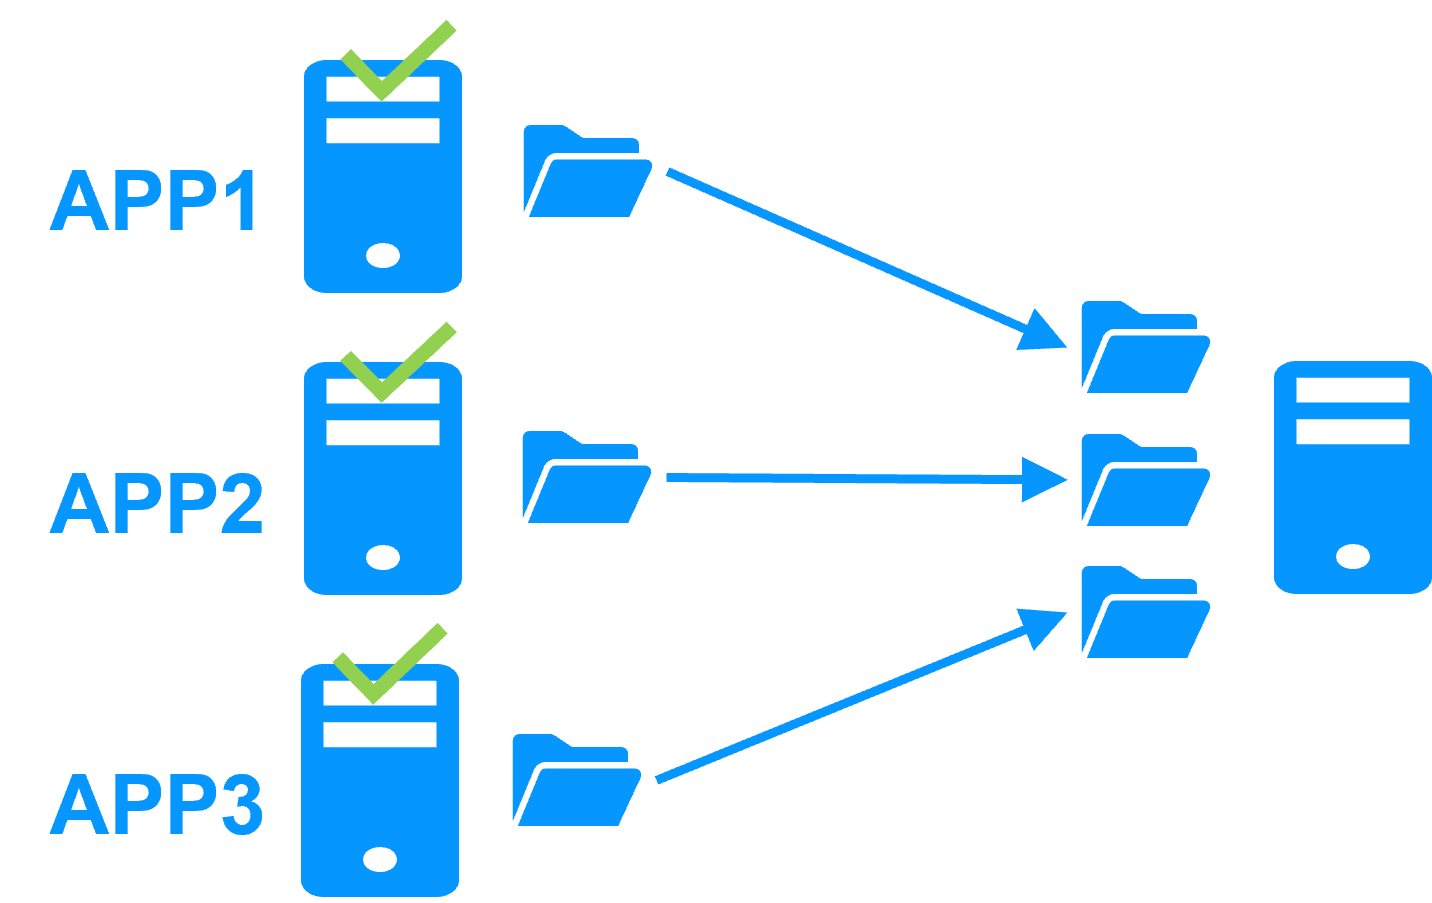 SafeKit N-1 redundancy cluster